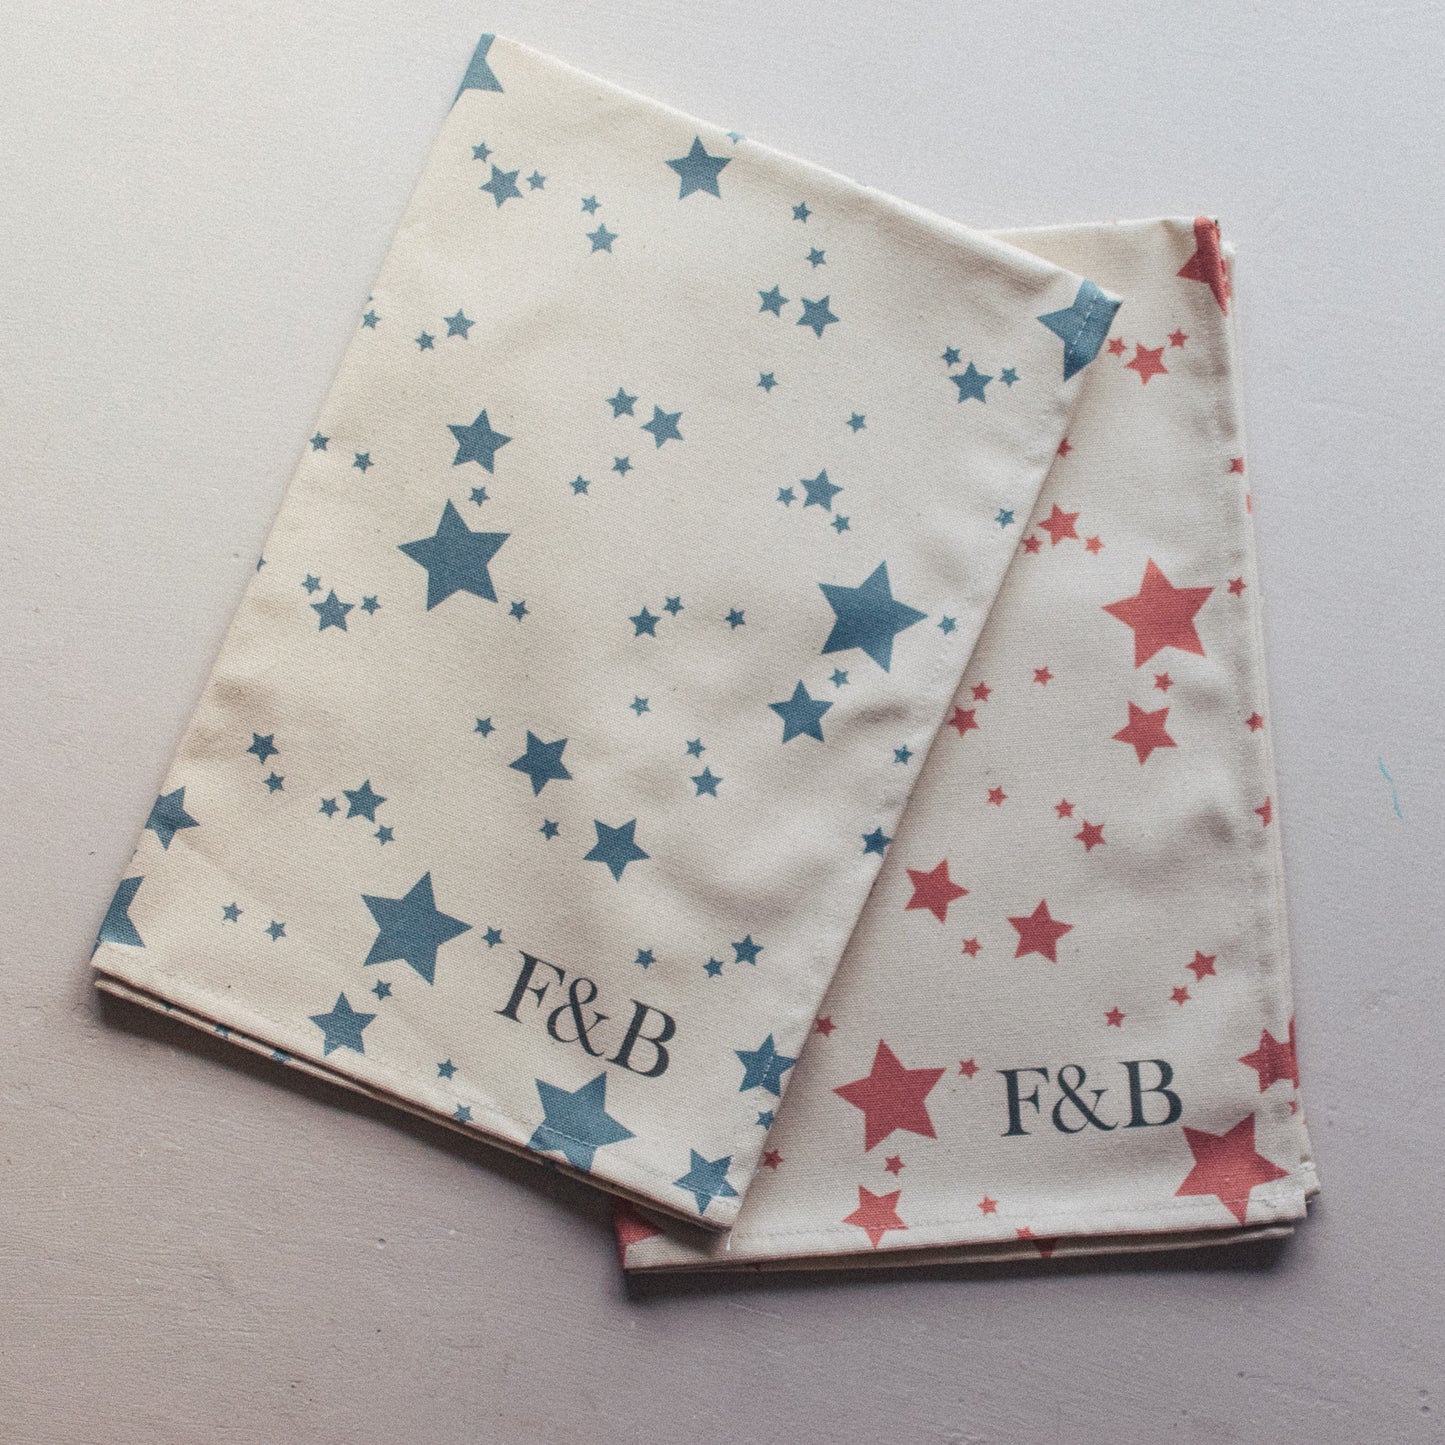 Pheasant Print Tea Towels - Game Bird Kitchenware - Green, Grey, Blue & Pink Tea Towels by F&B